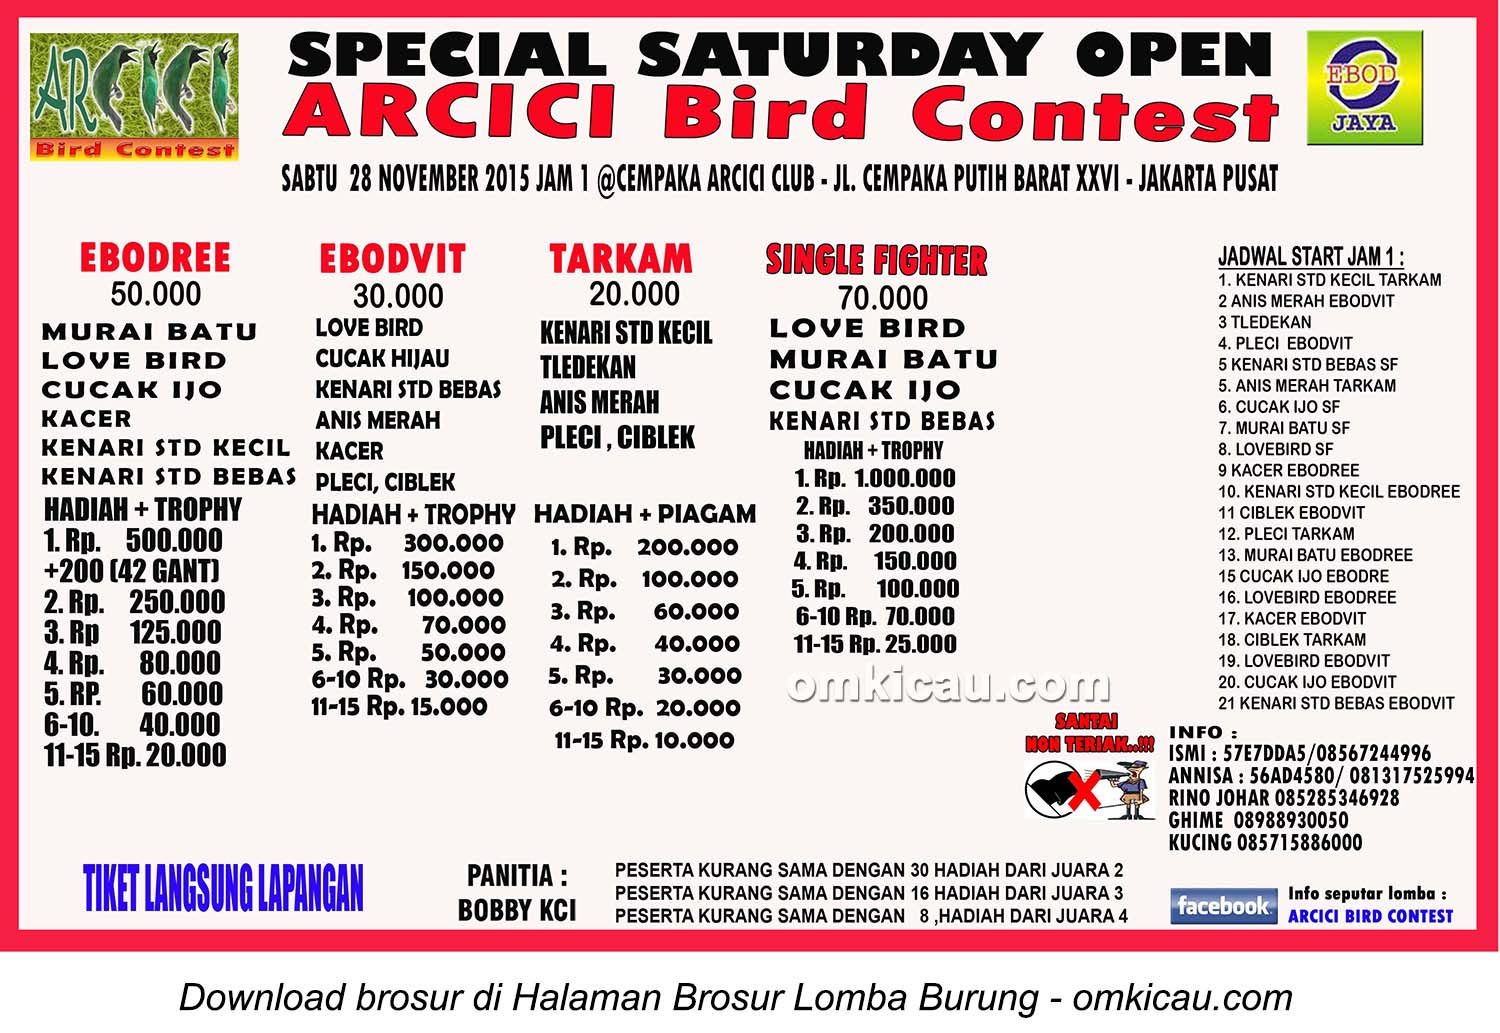 Brosur Special Saturday Open Arcici Bird Contest, Jakarta, 28 November 2015